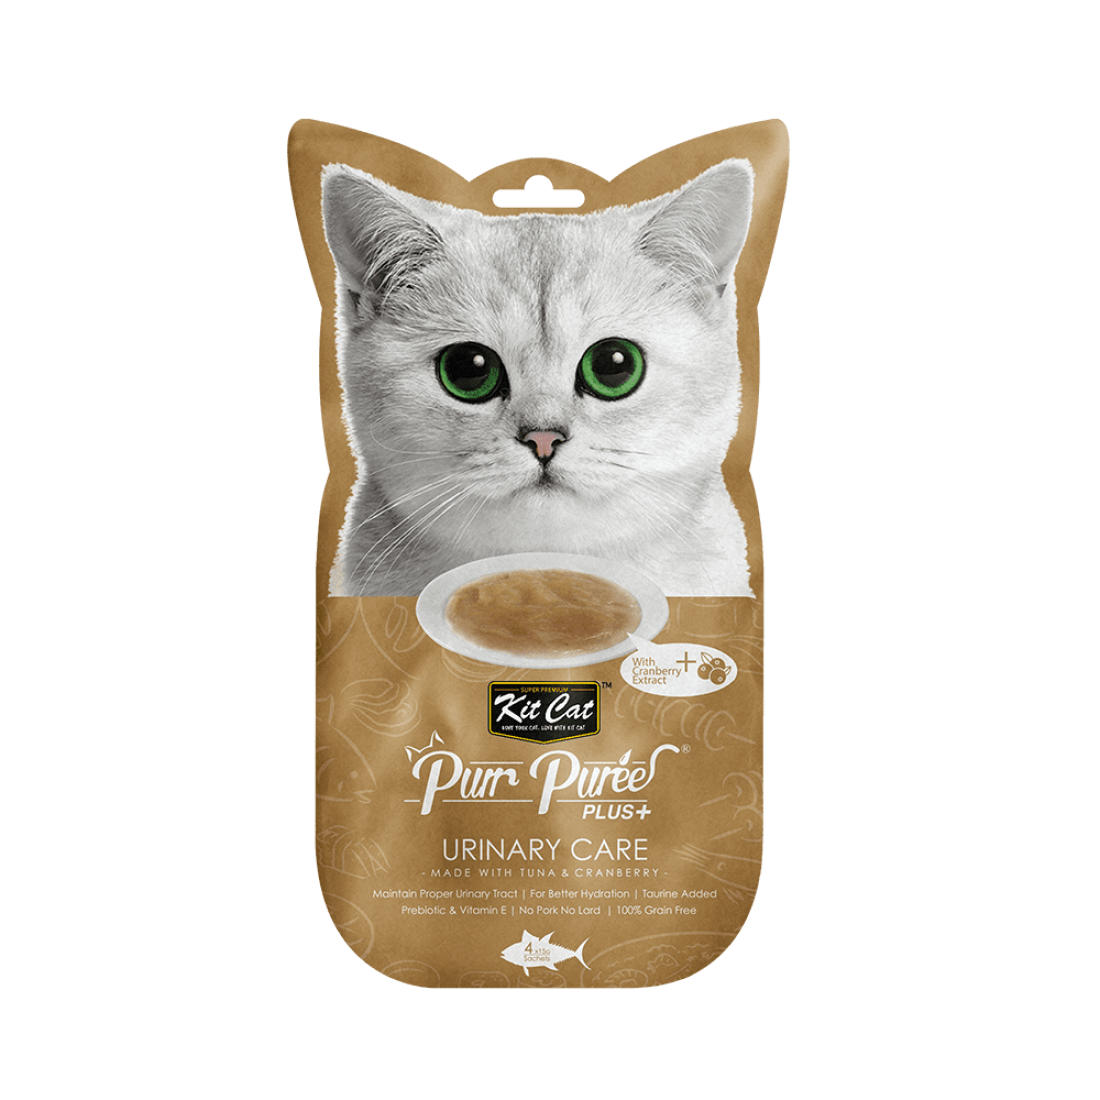 Recompense lichde pentru pisici Kit Cat Purr Puree Plus+ Urinary Care, ton si merisoare, 4x15g